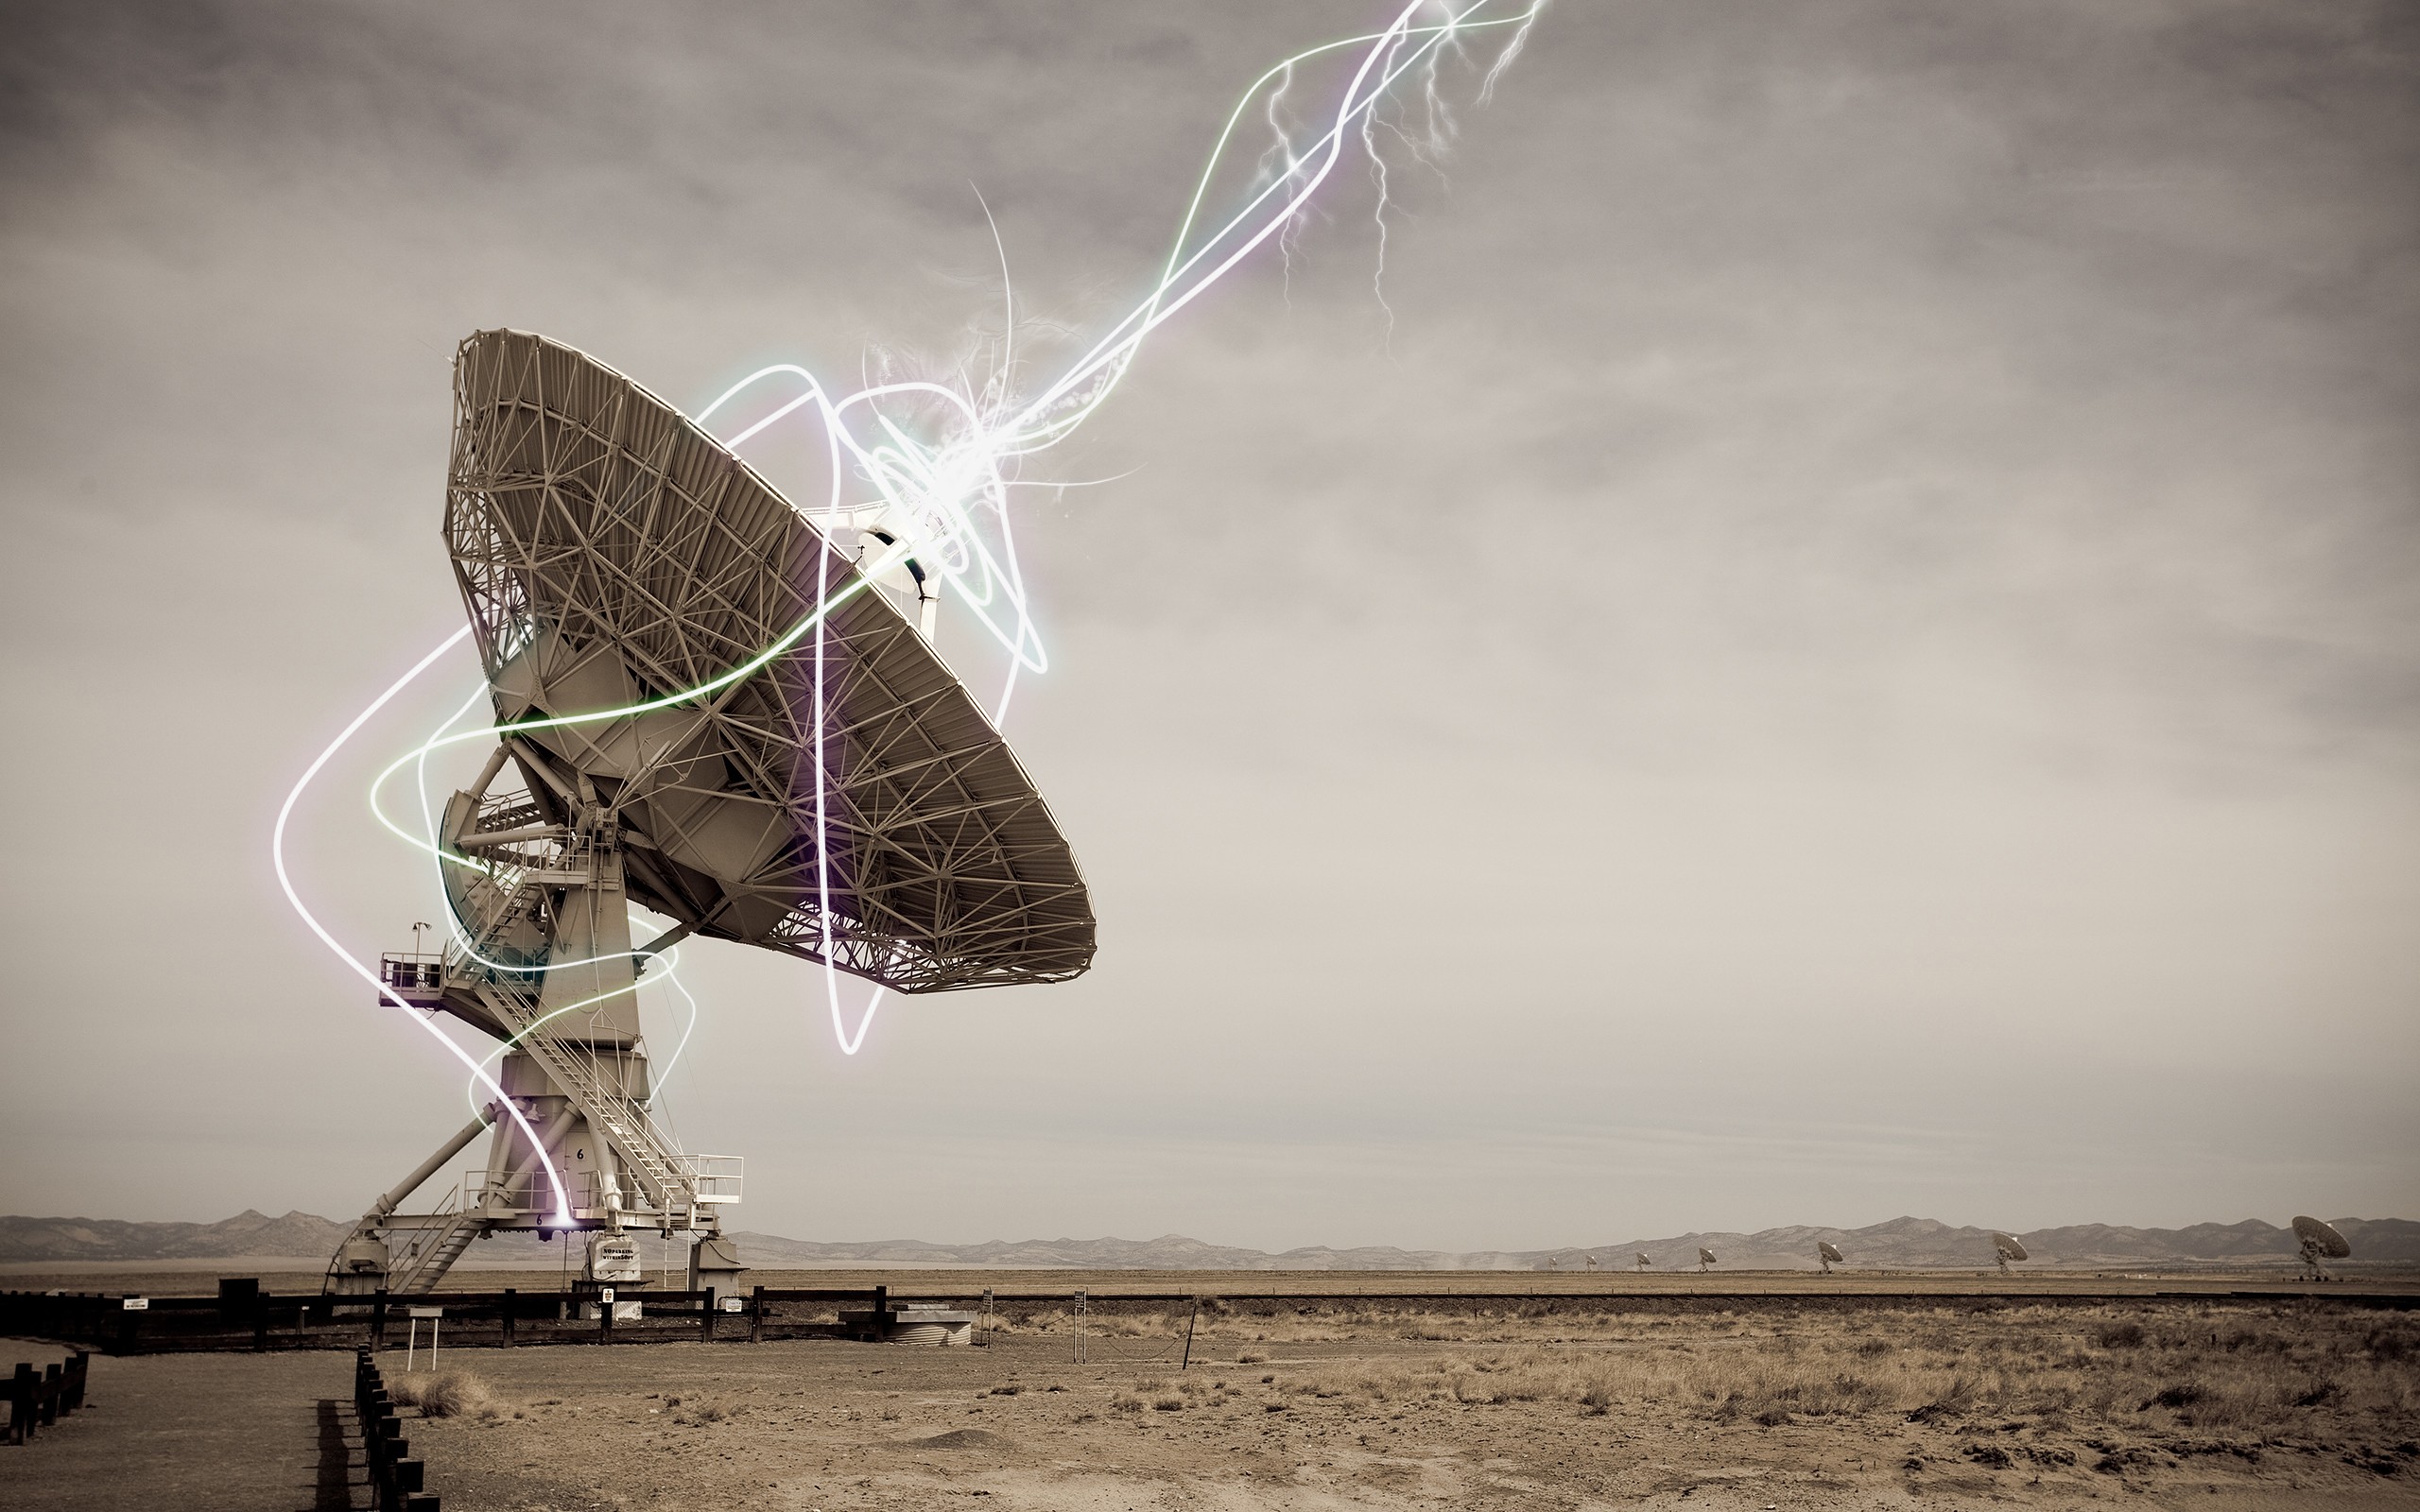 Landscape Desert Neon Lights Antenna Digital Art Shapes 2560x1600